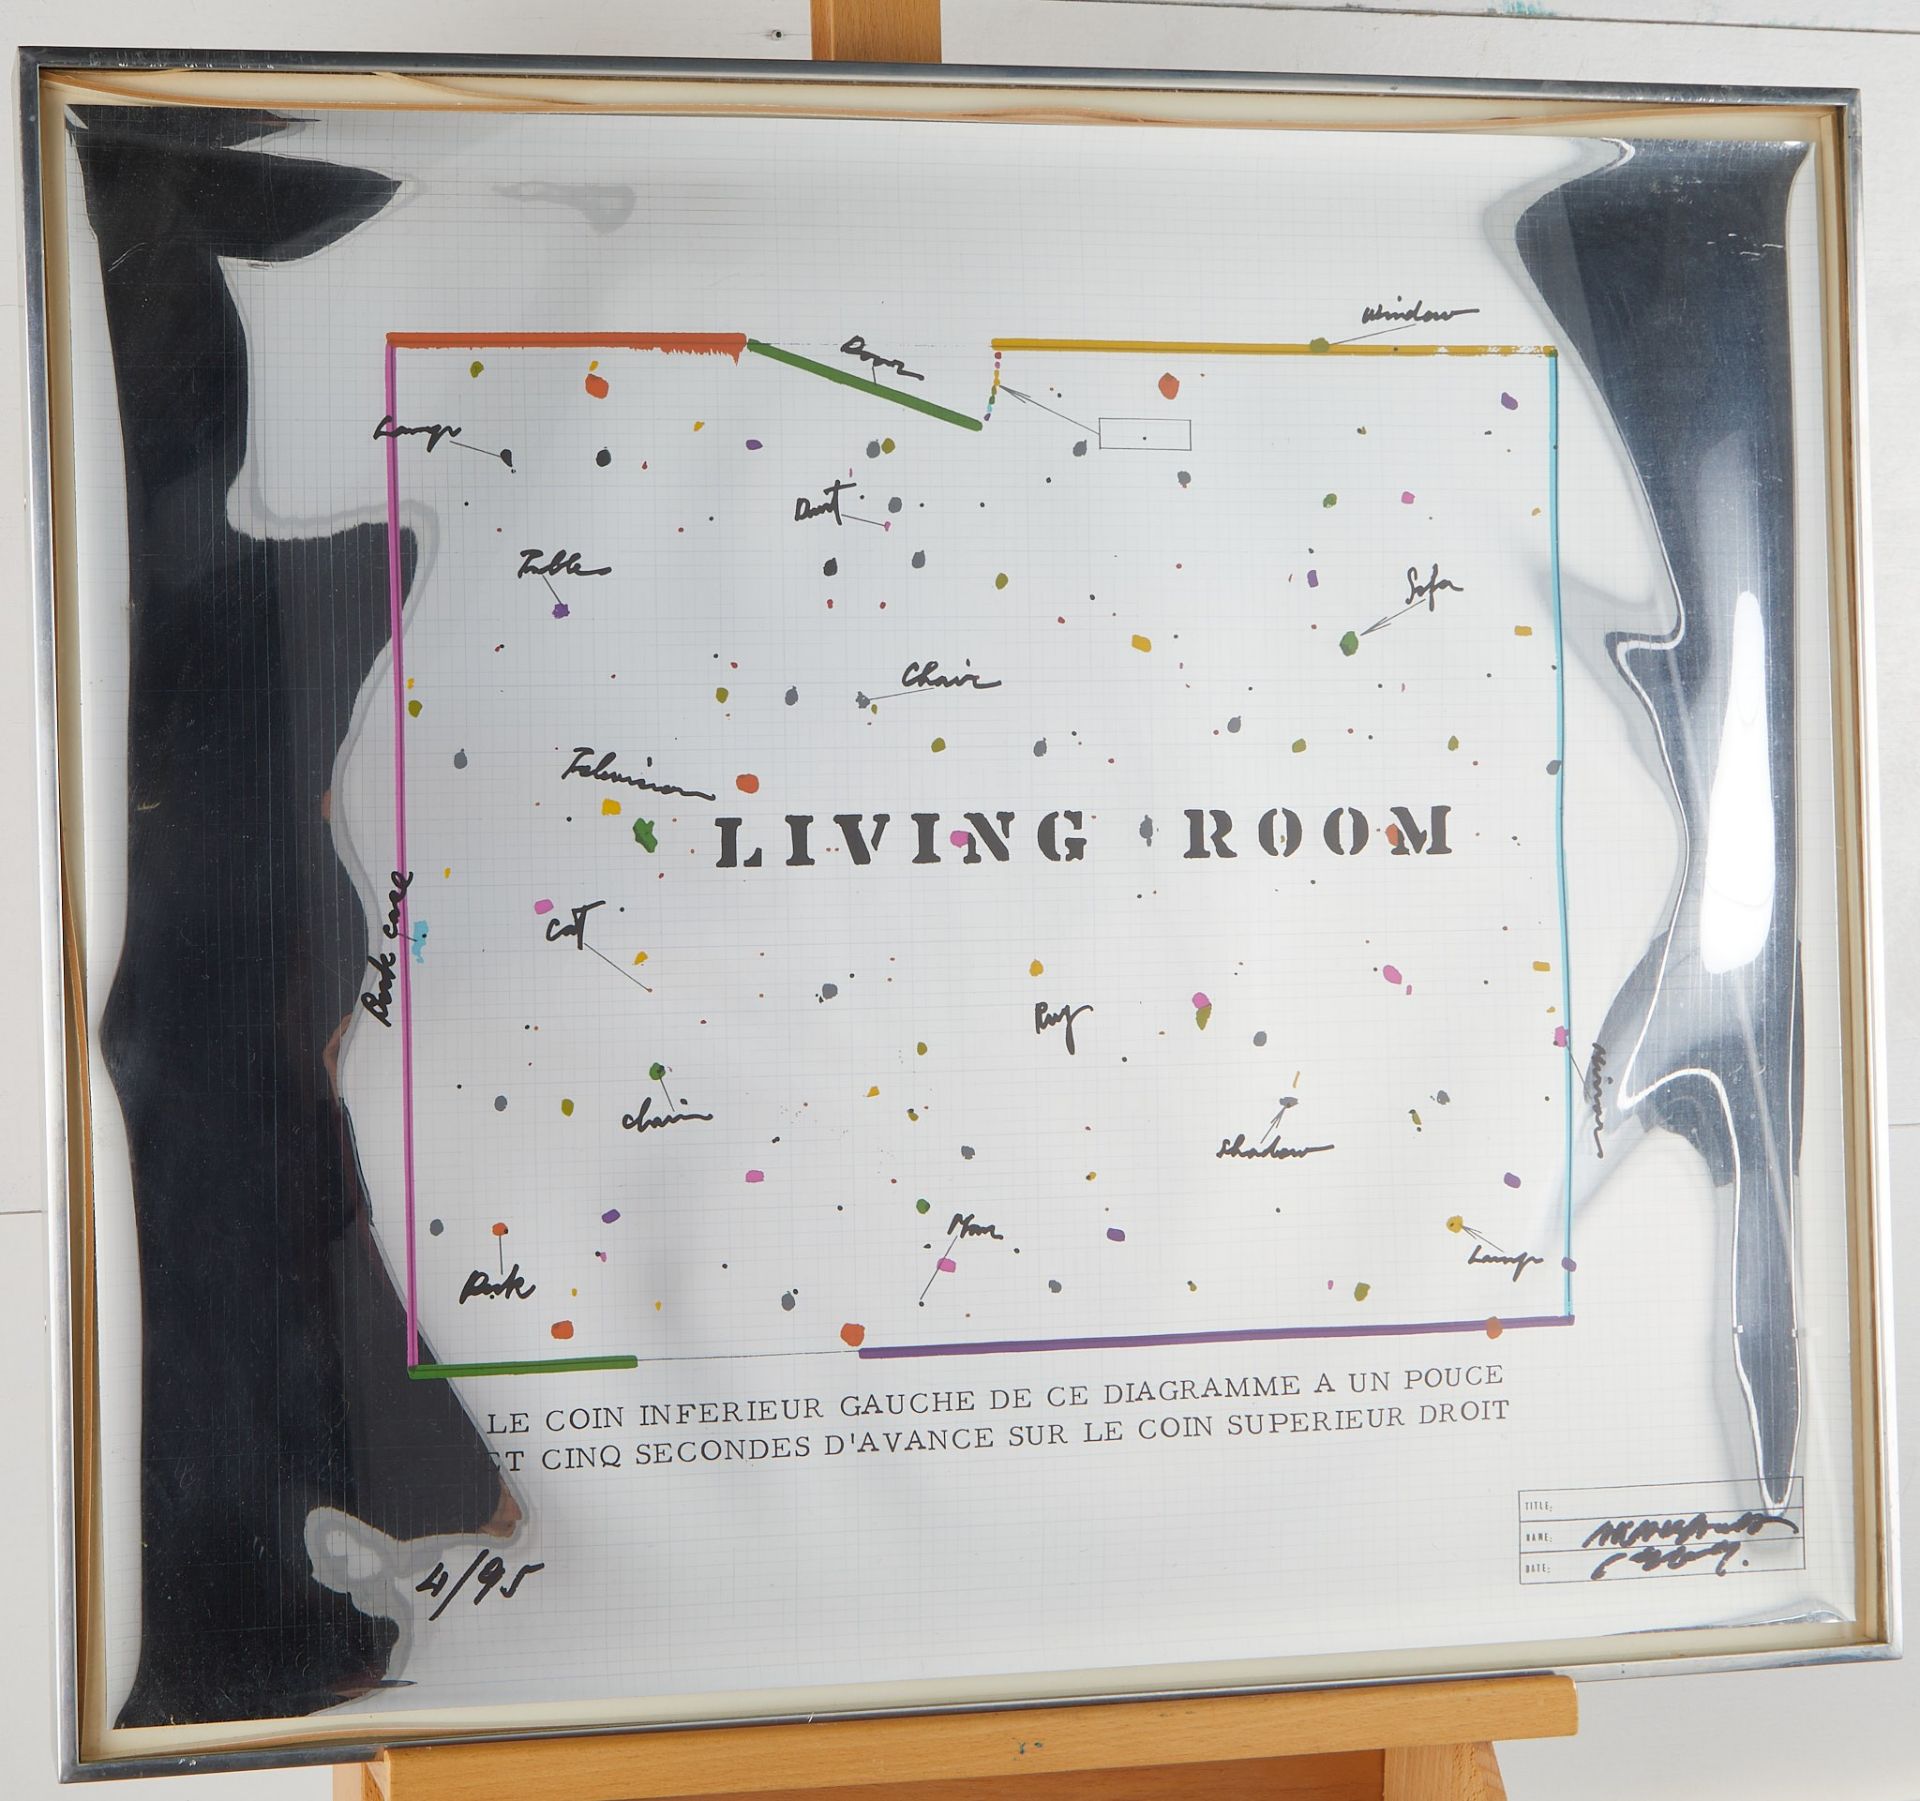 Shusaku Arakawa "Living Room" Silkscreen - Image 2 of 4